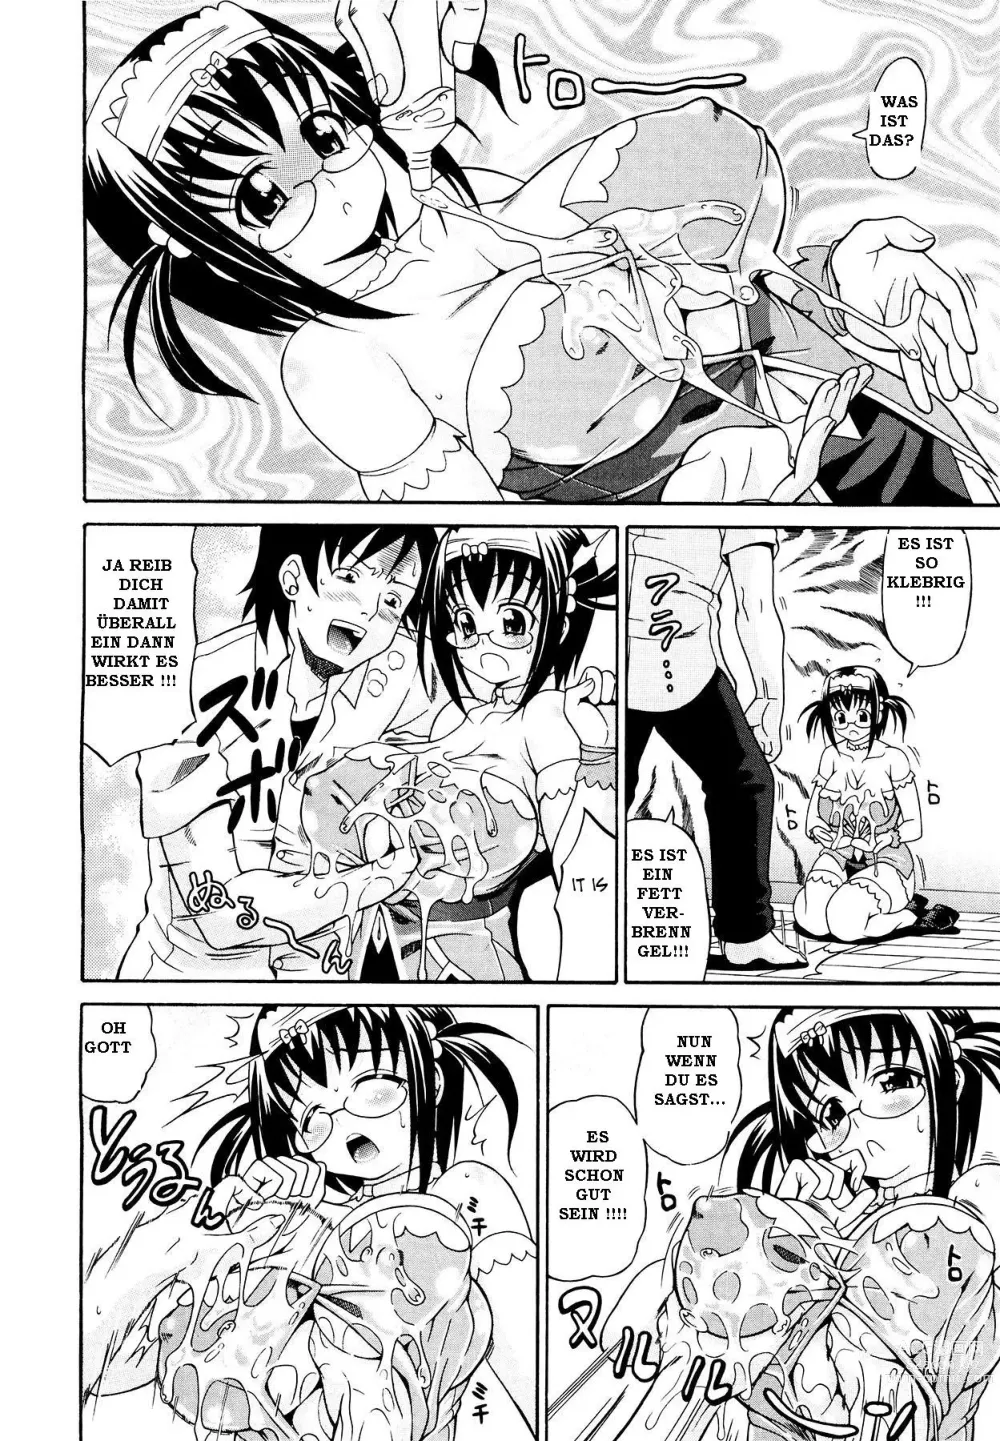 Page 8 of doujinshi Chubby